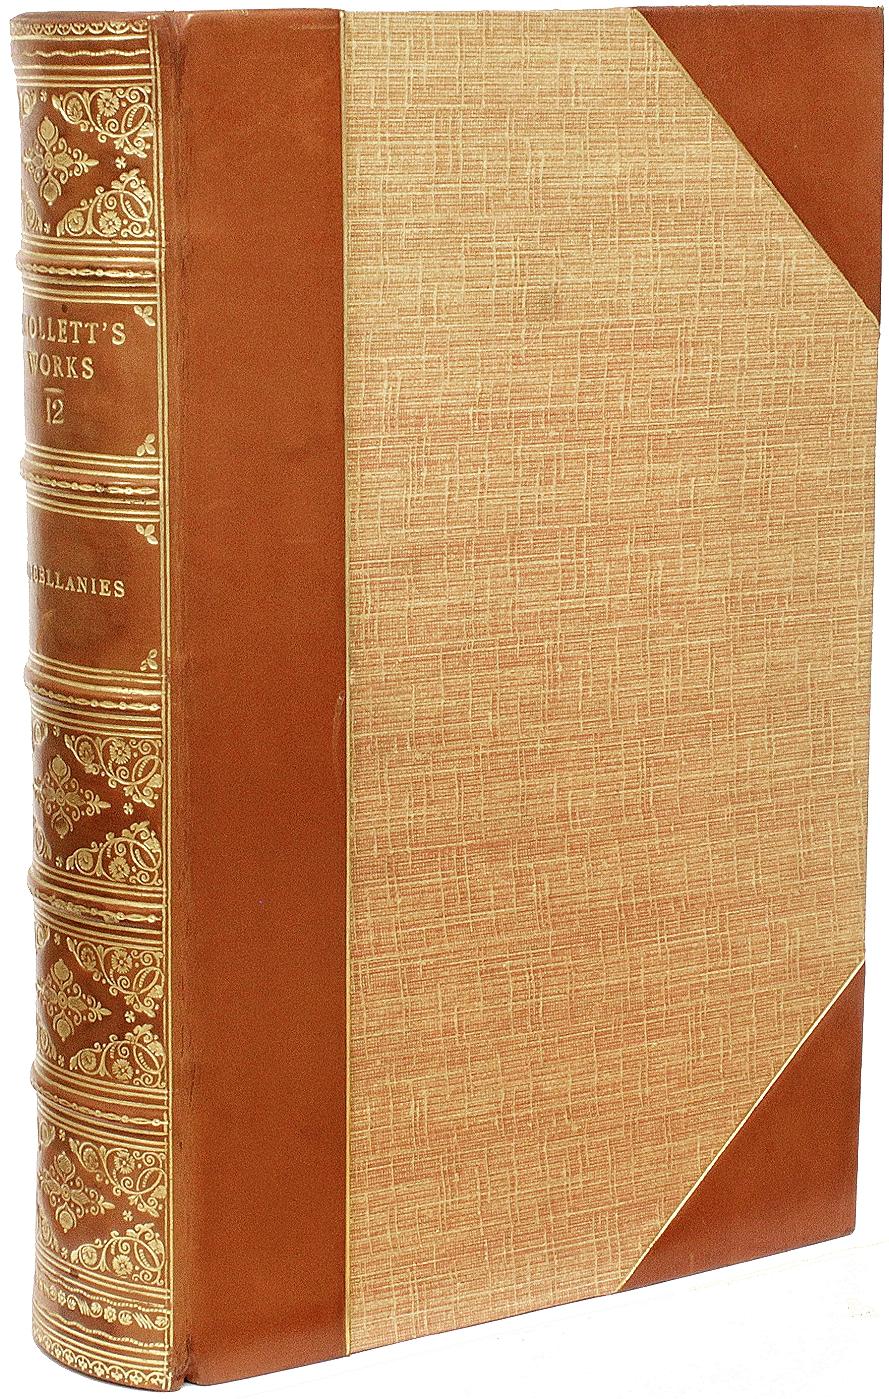 AUTHOR: SMOLLETT, Tobias. 

TITLE: The Works Of Tobias Smollett.

PUBLISHER: NY: Chas. Scribner's Sons, 1899.

DESCRIPTION: 12 vols., 8-13/16